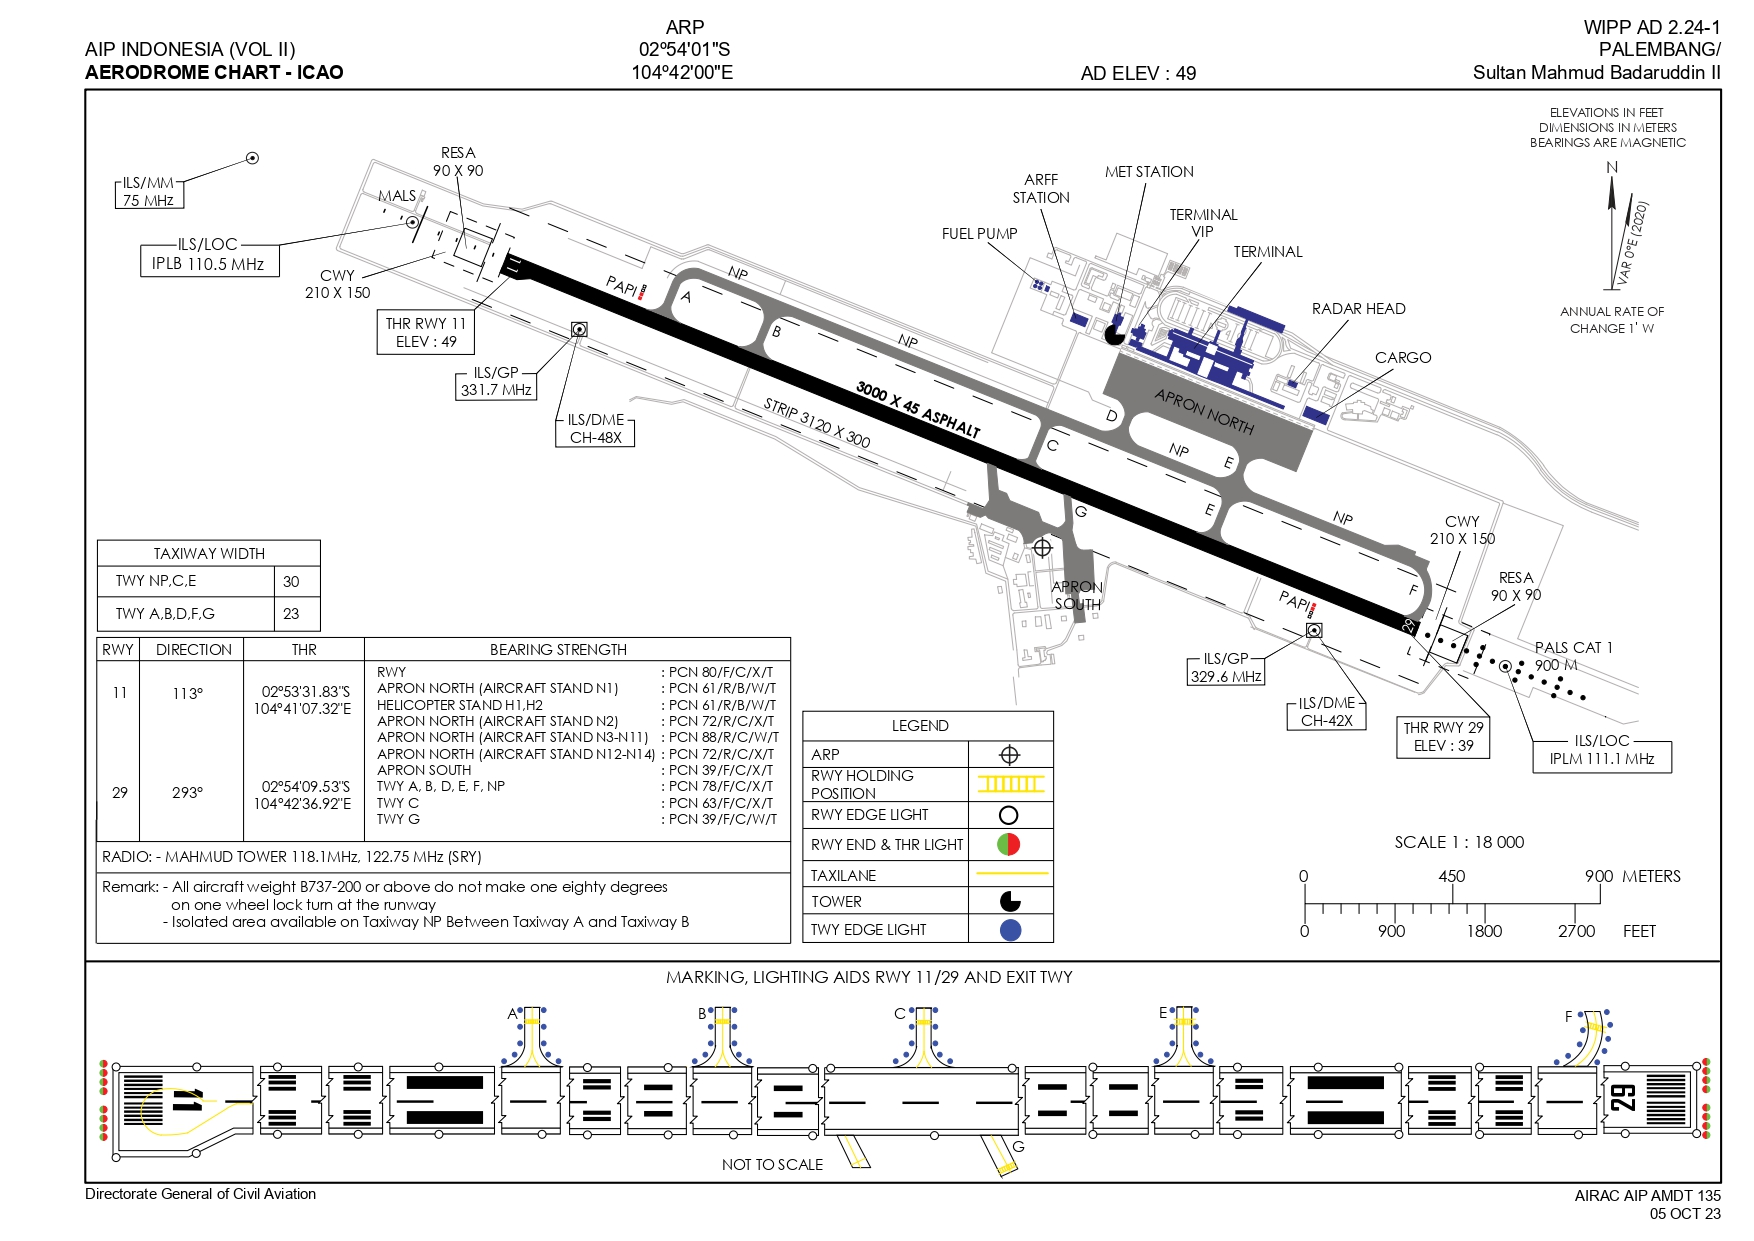 Gambar Peta Bandara AERODROME CHART PALEMBANG/SULTAN MAHMUD BADARUDDIN II